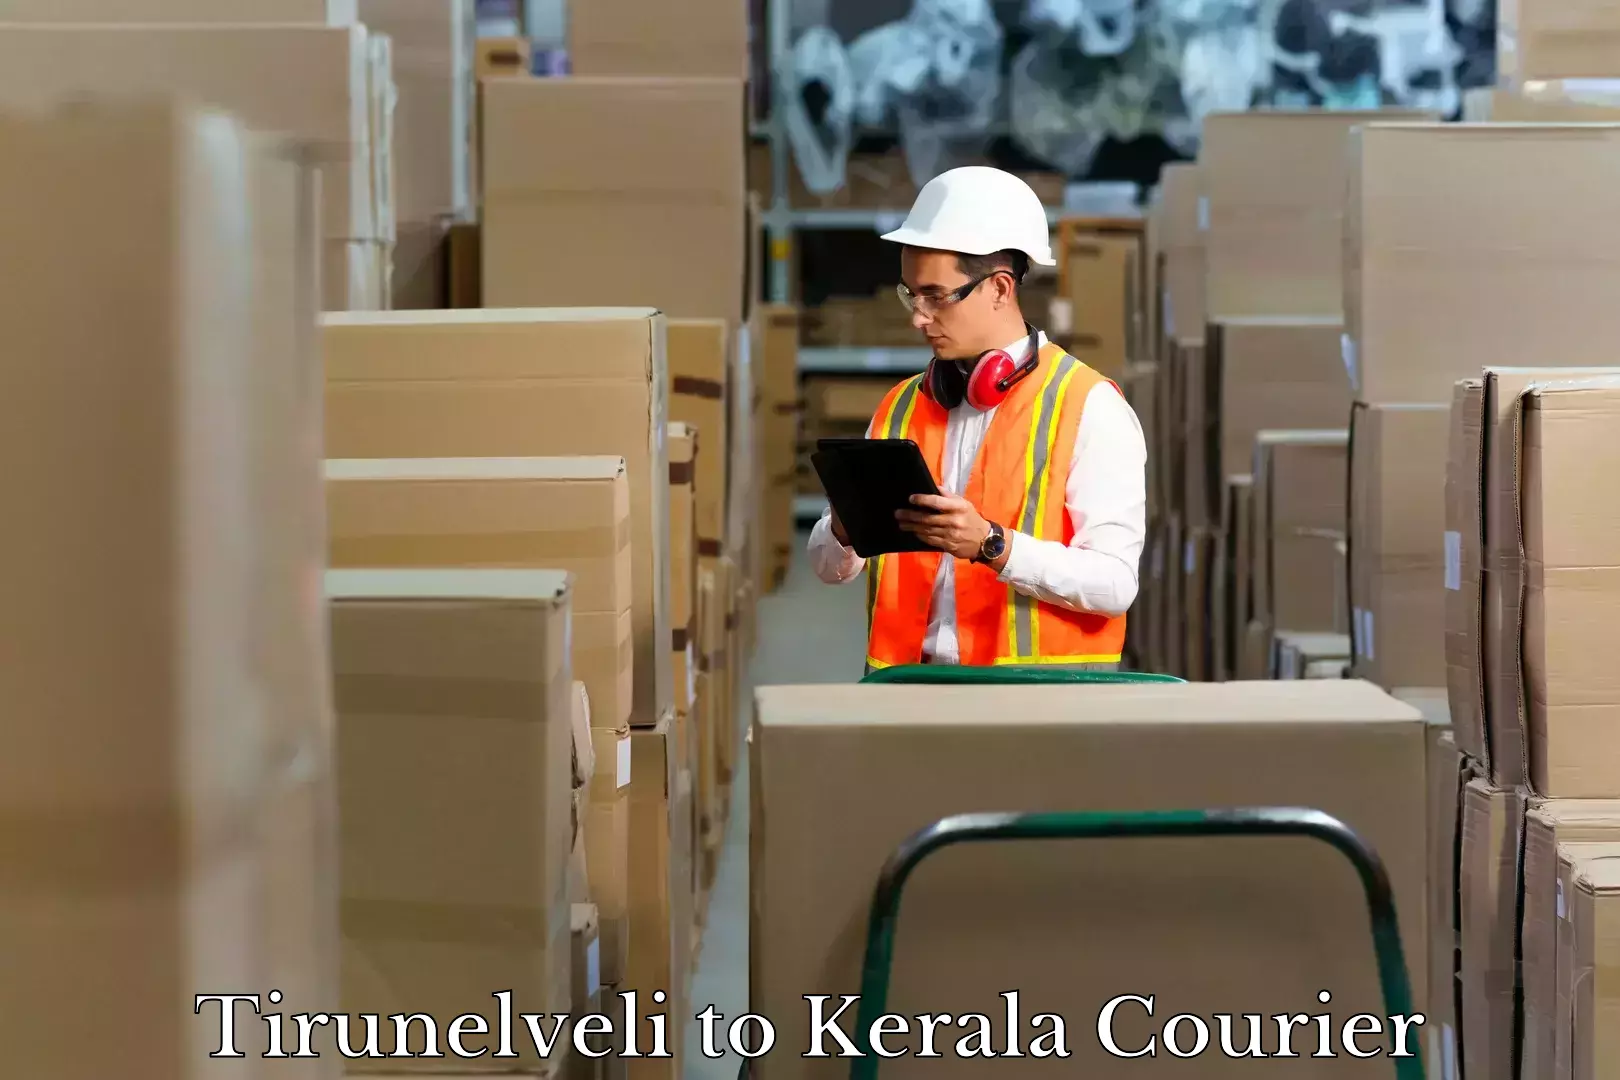 Baggage transport innovation Tirunelveli to Kerala